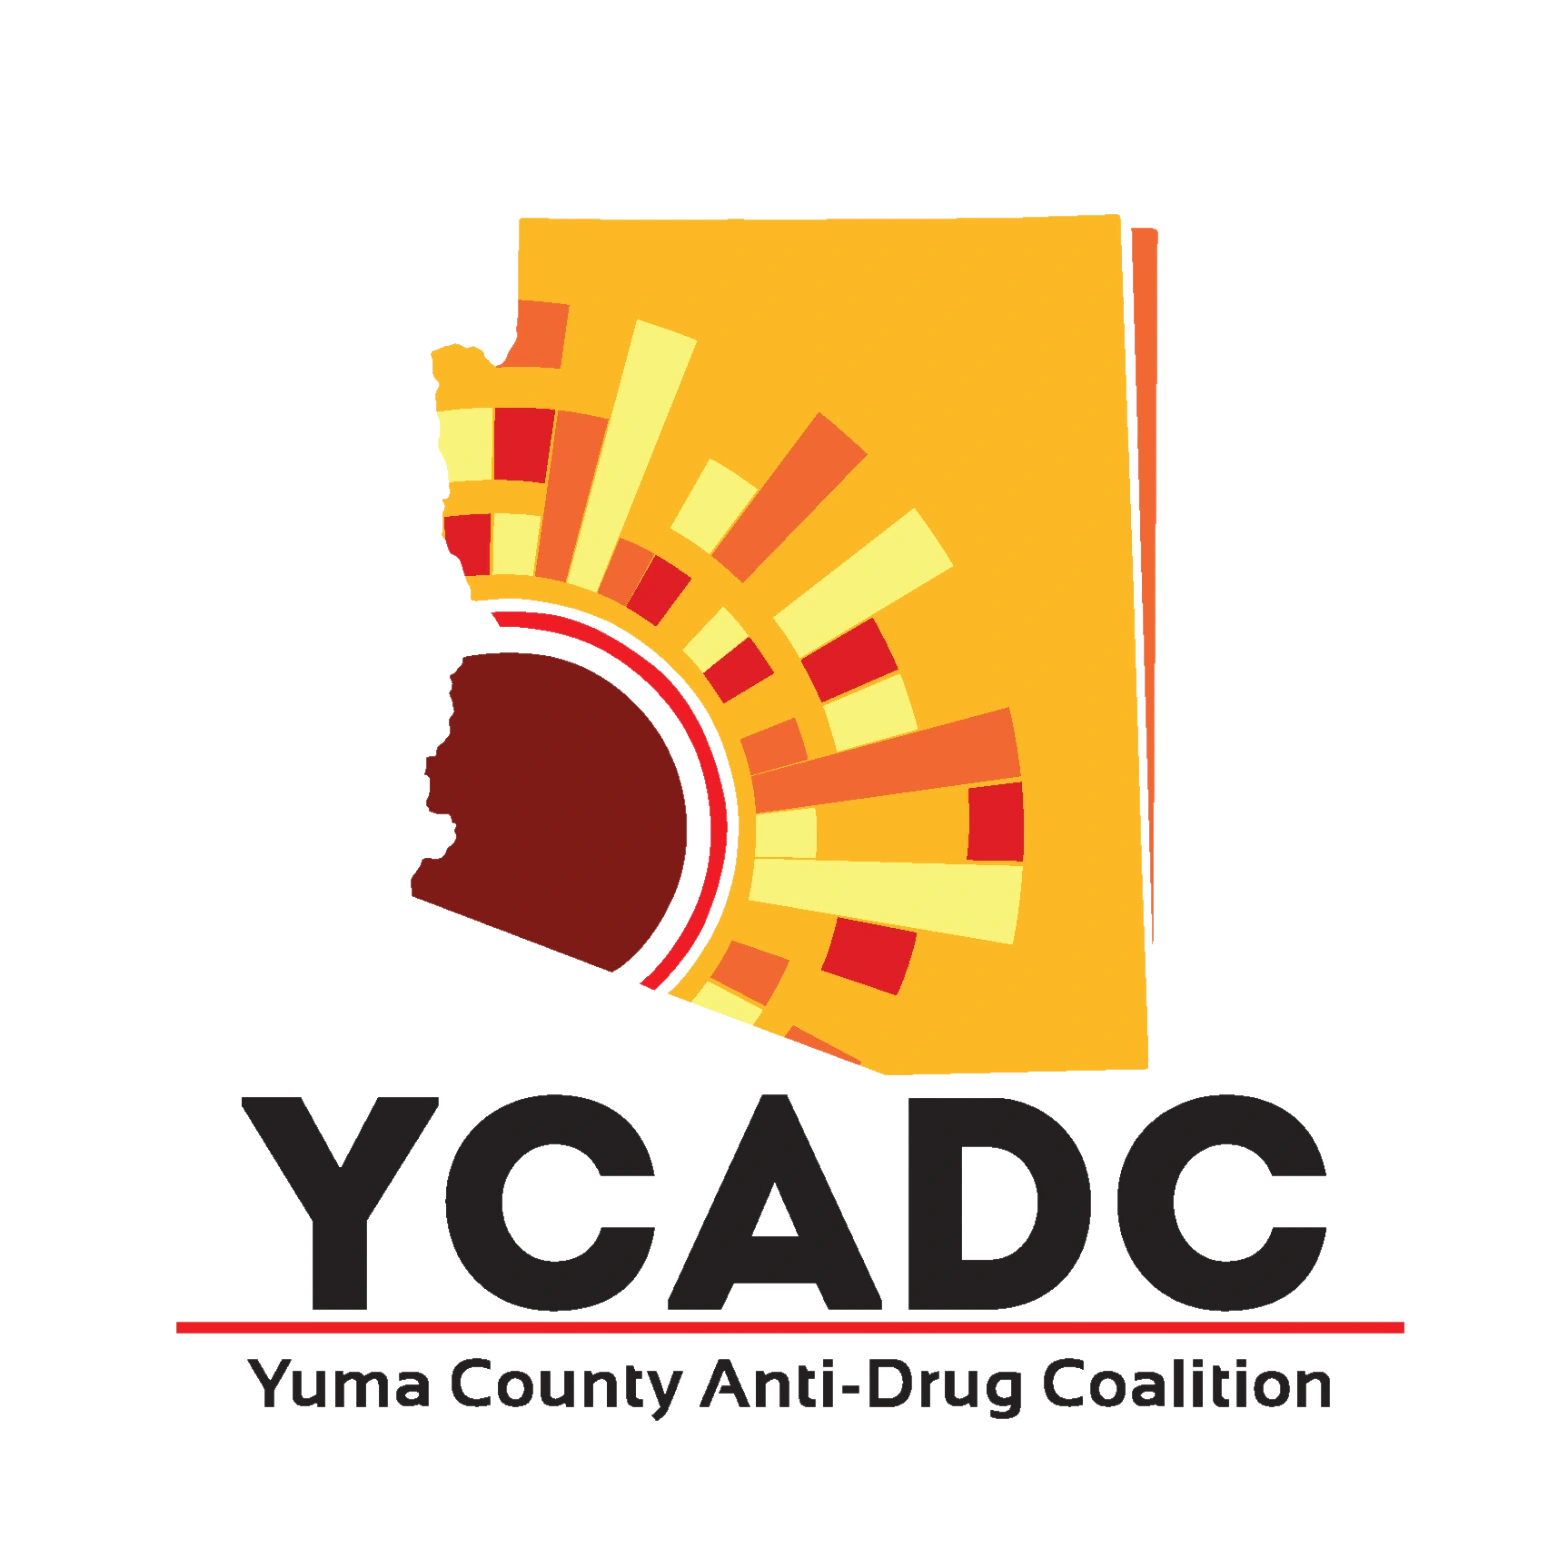 YCADC logo